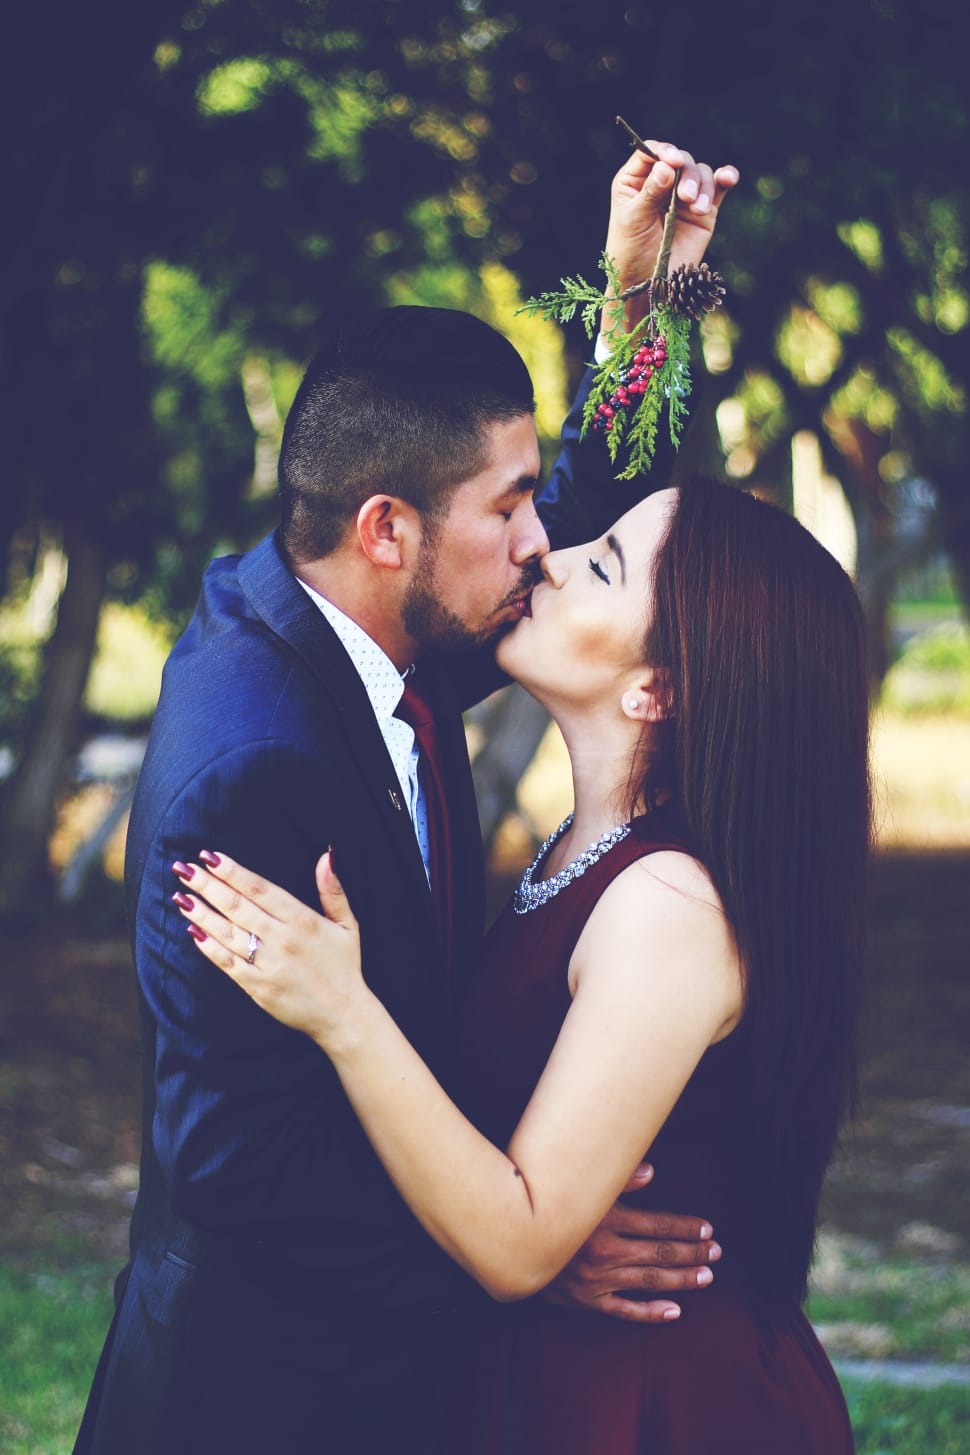 man holding mistletoe kissing woman preview